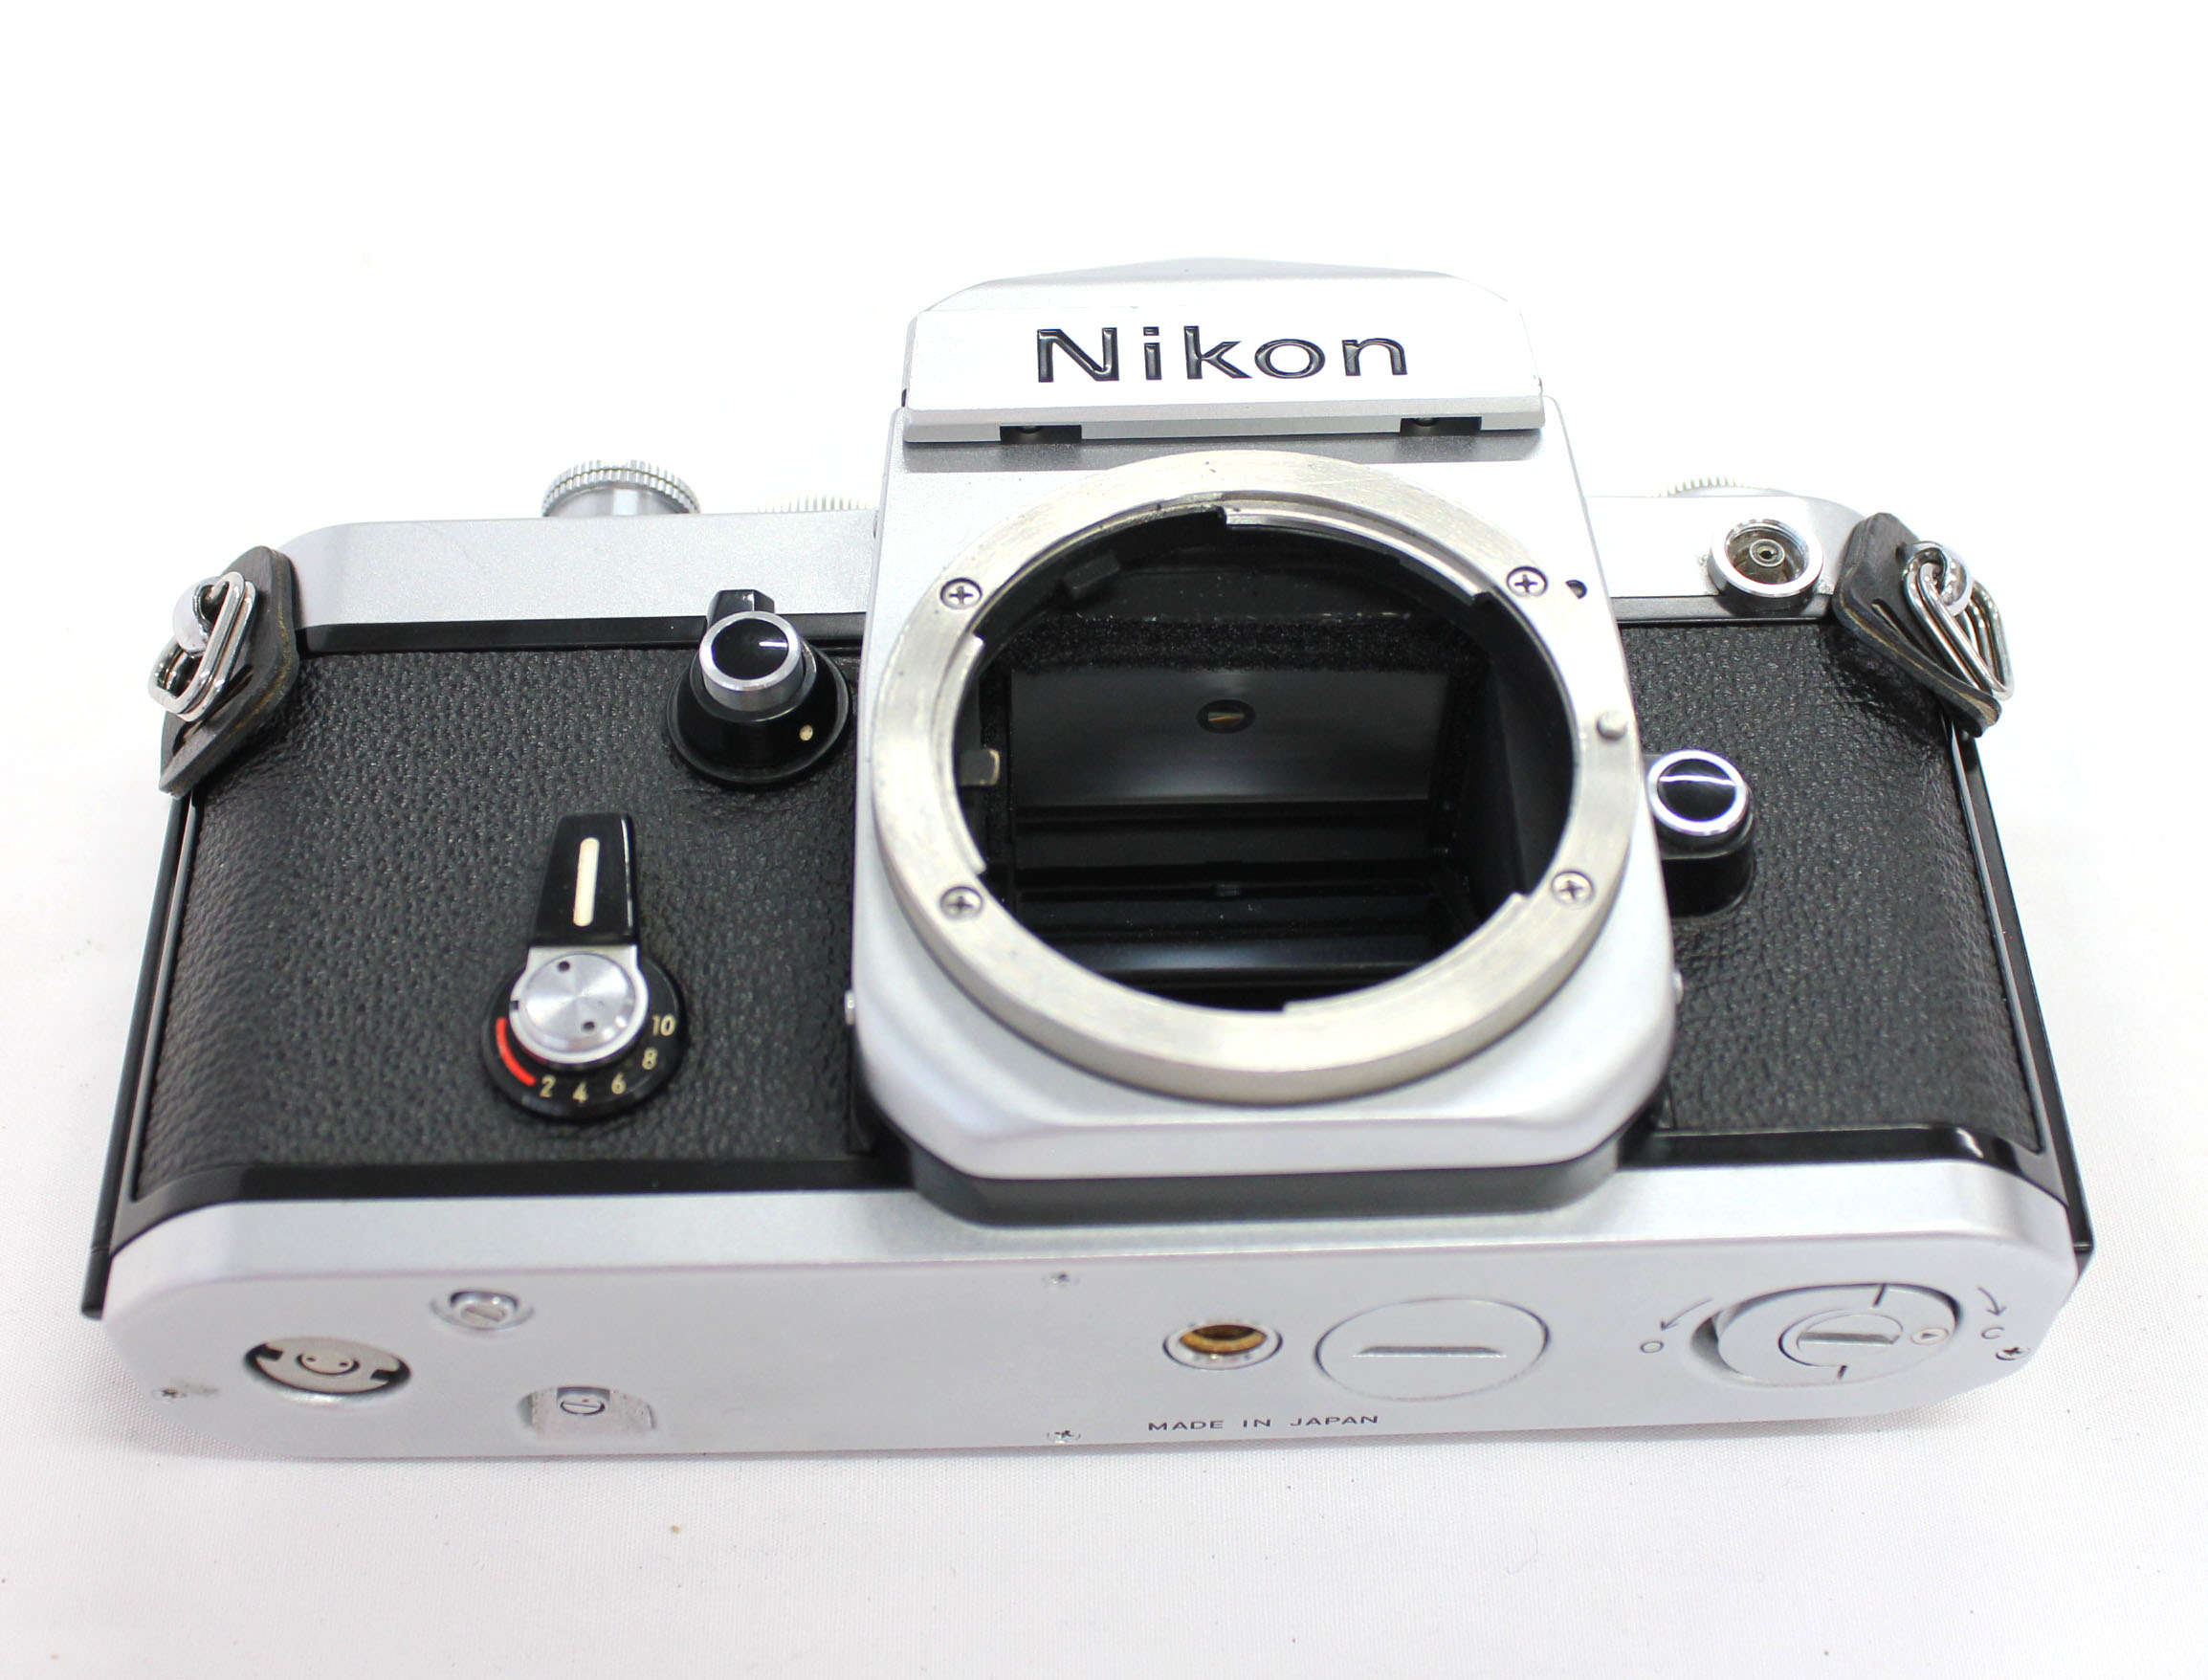  Nikon F2 Eye Level 35mm SLR Film Camera S/N 784* w/ DE-1 View Finder from Japan Photo 9